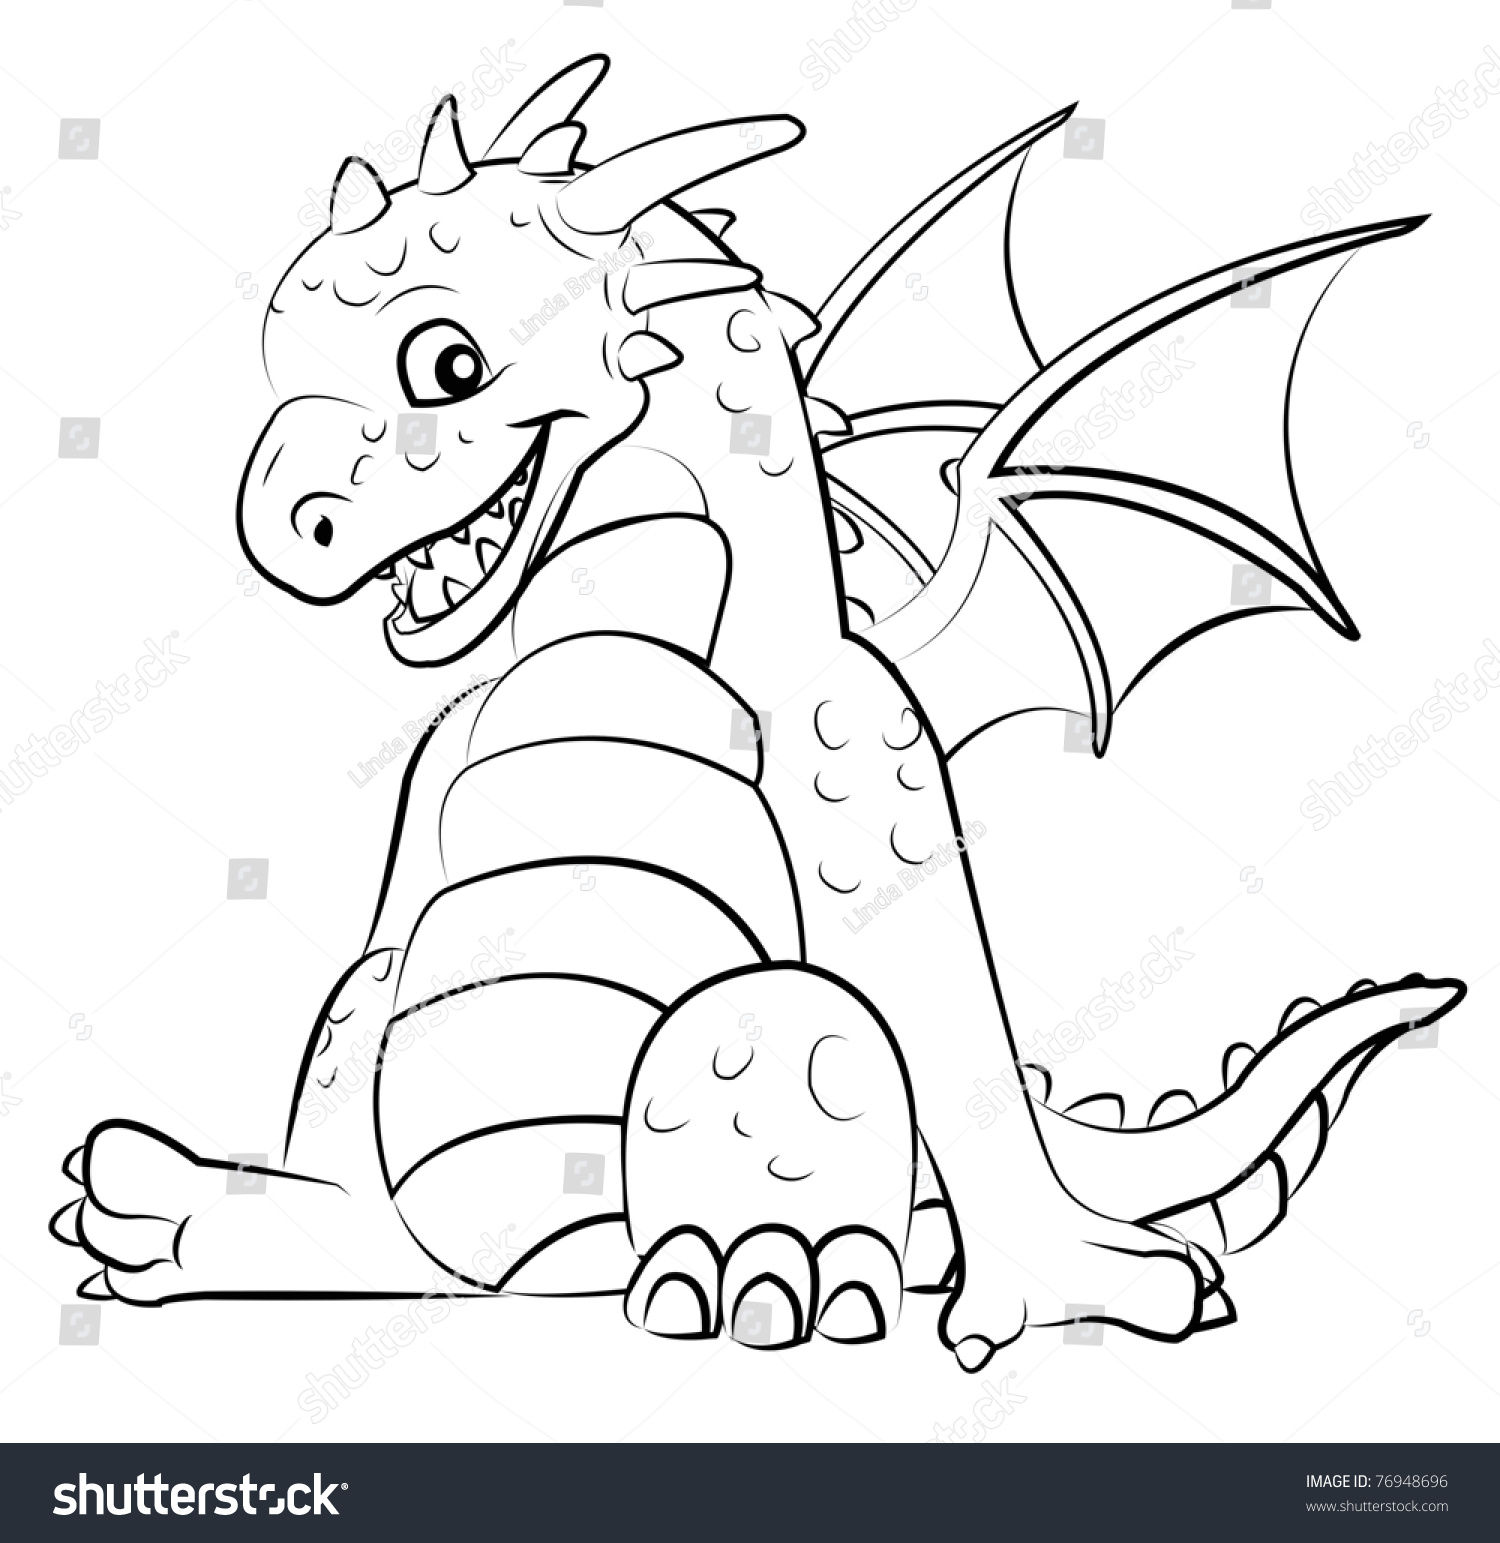 Cute Cartoon Dragon Black White Vector Stock Vector Royalty Free ...